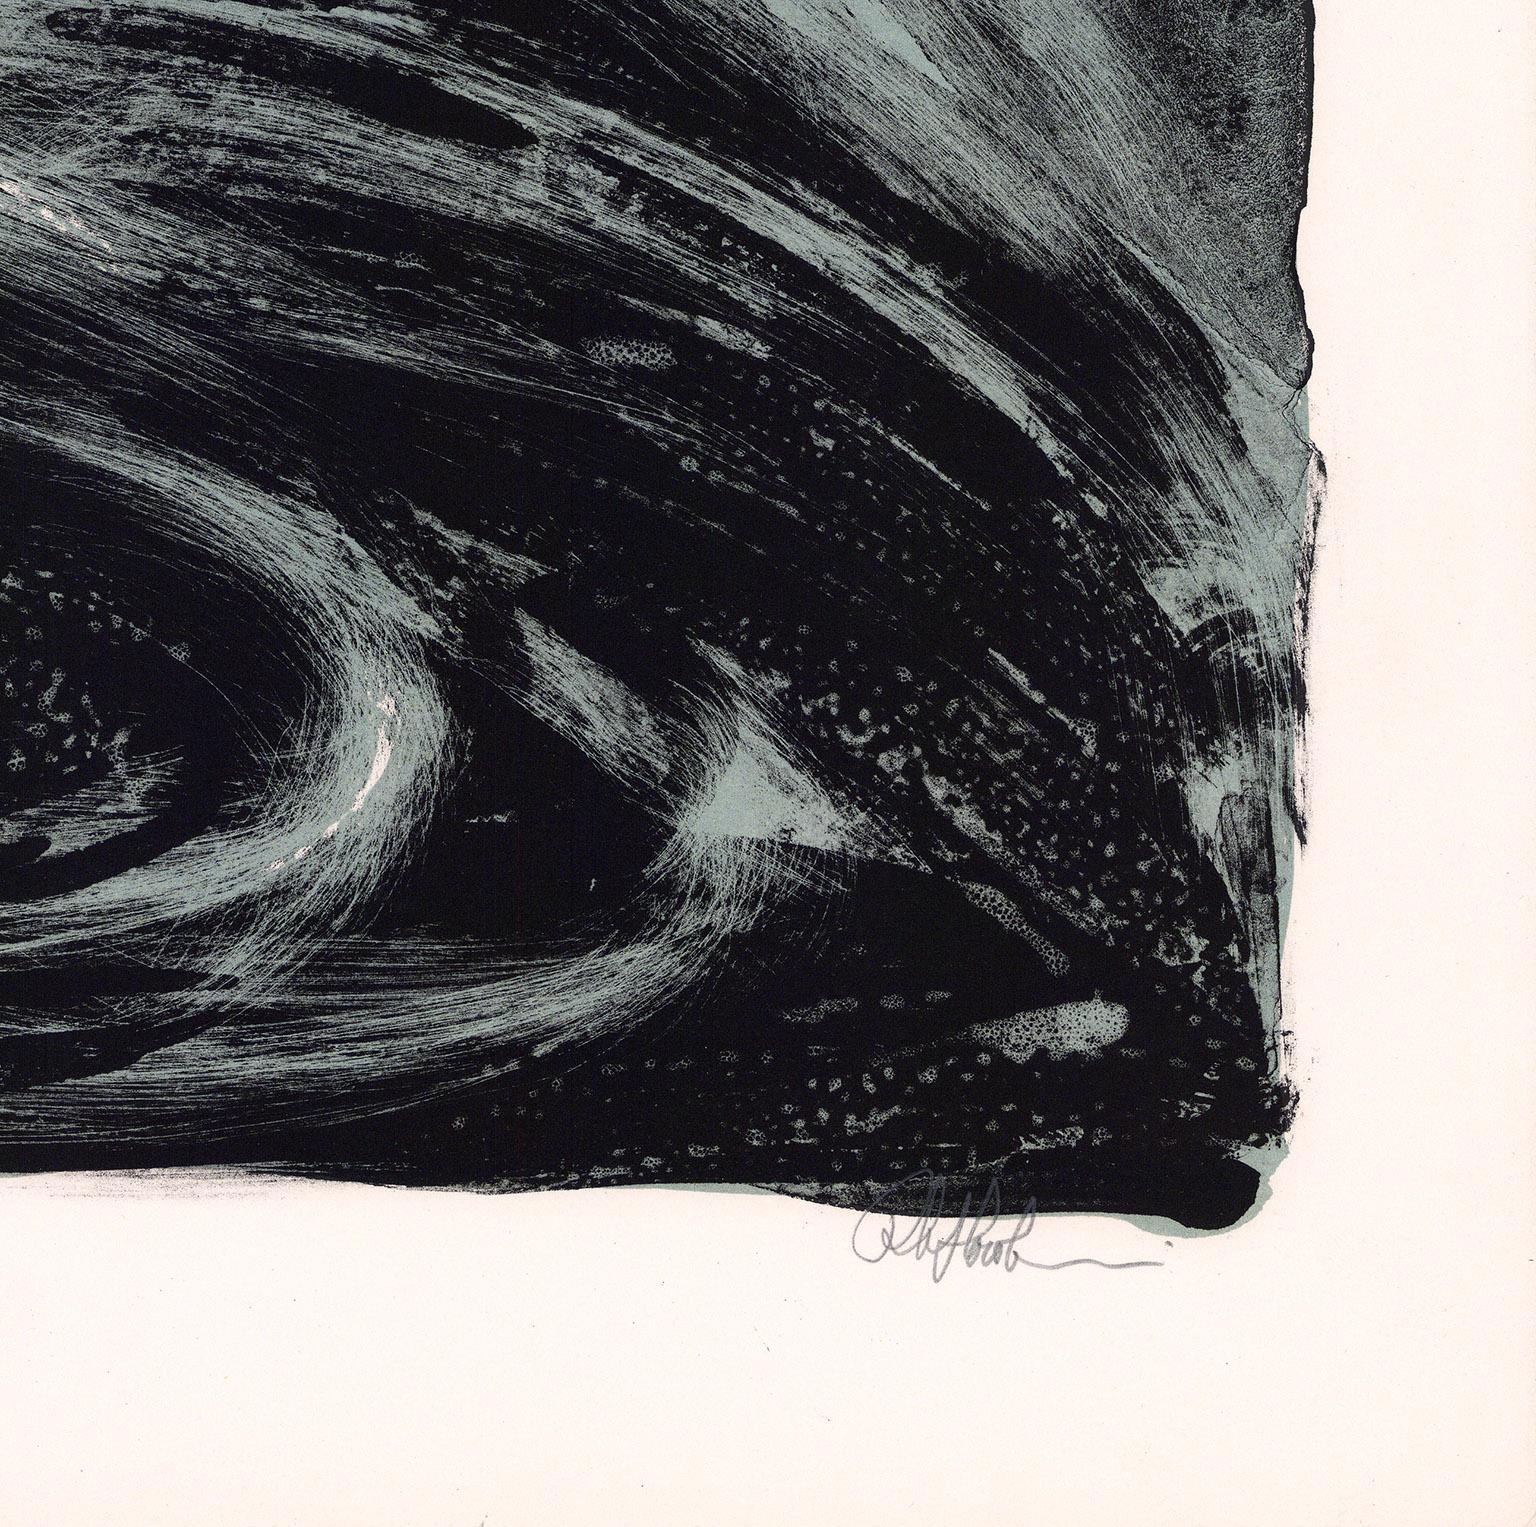 Waves - Print by Richard Florsheim